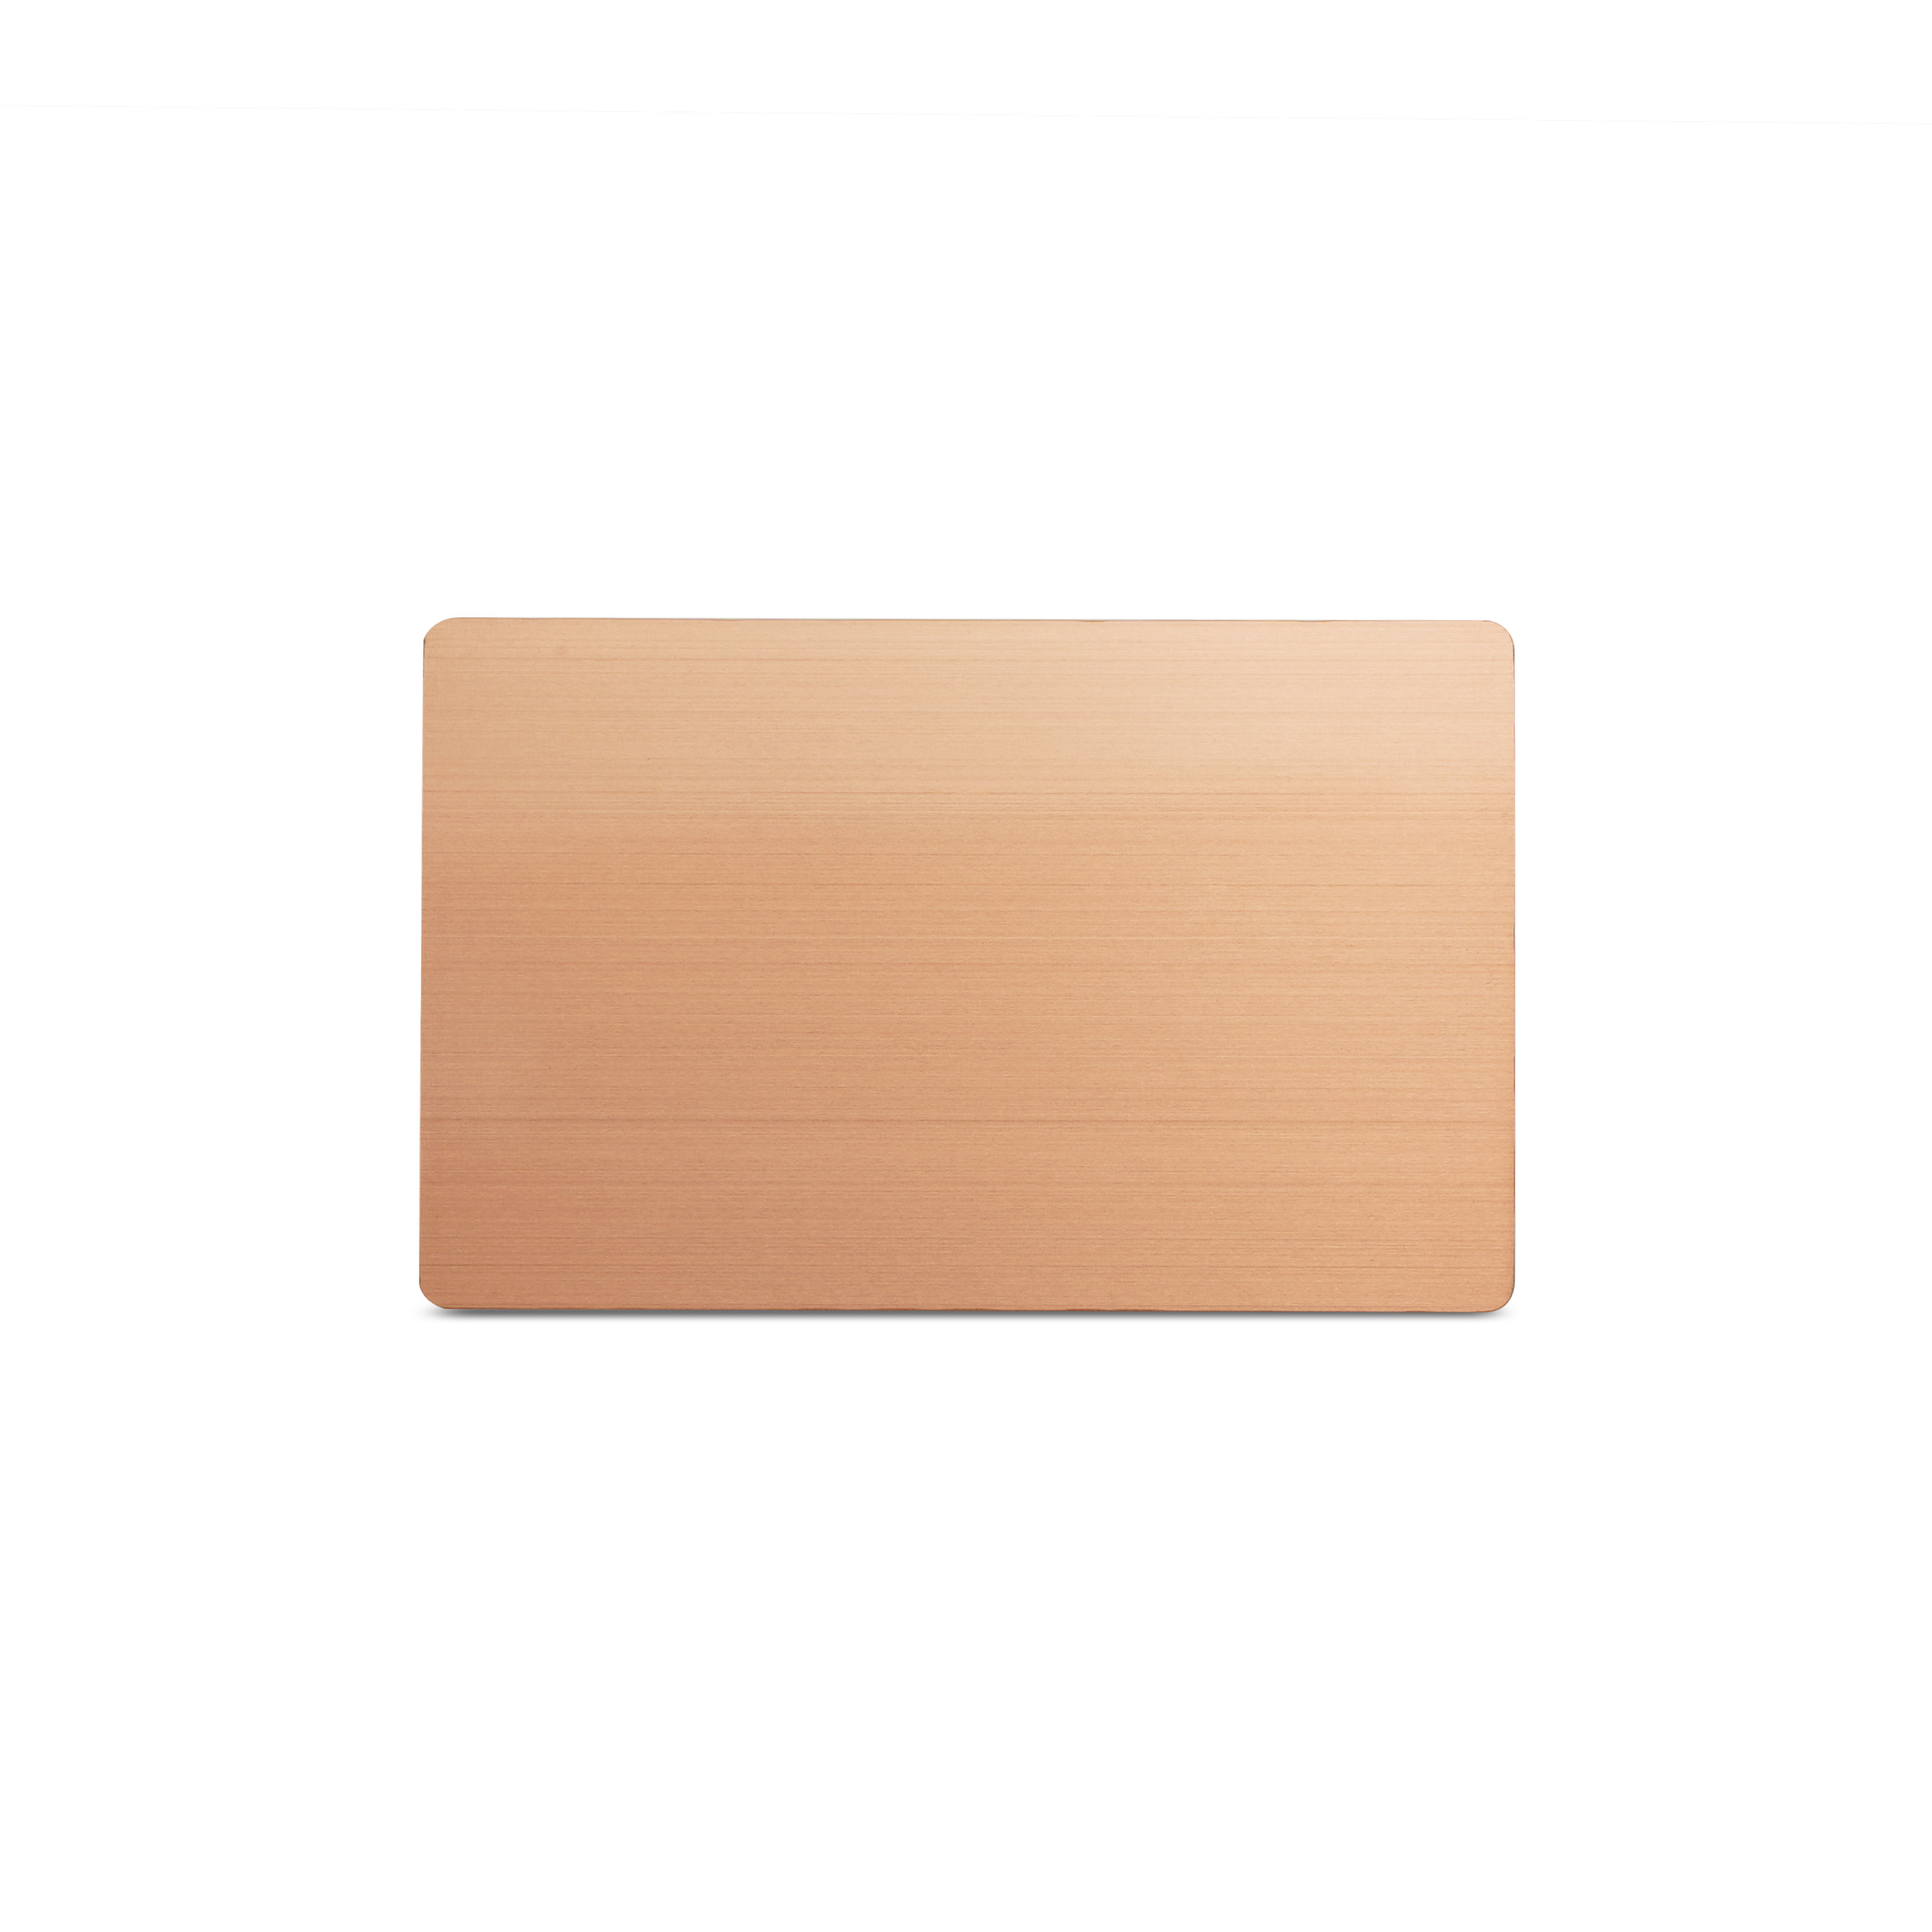 NFC card metal - 85.6 x 54 mm - NTAG213 - 180 byte - rose gold